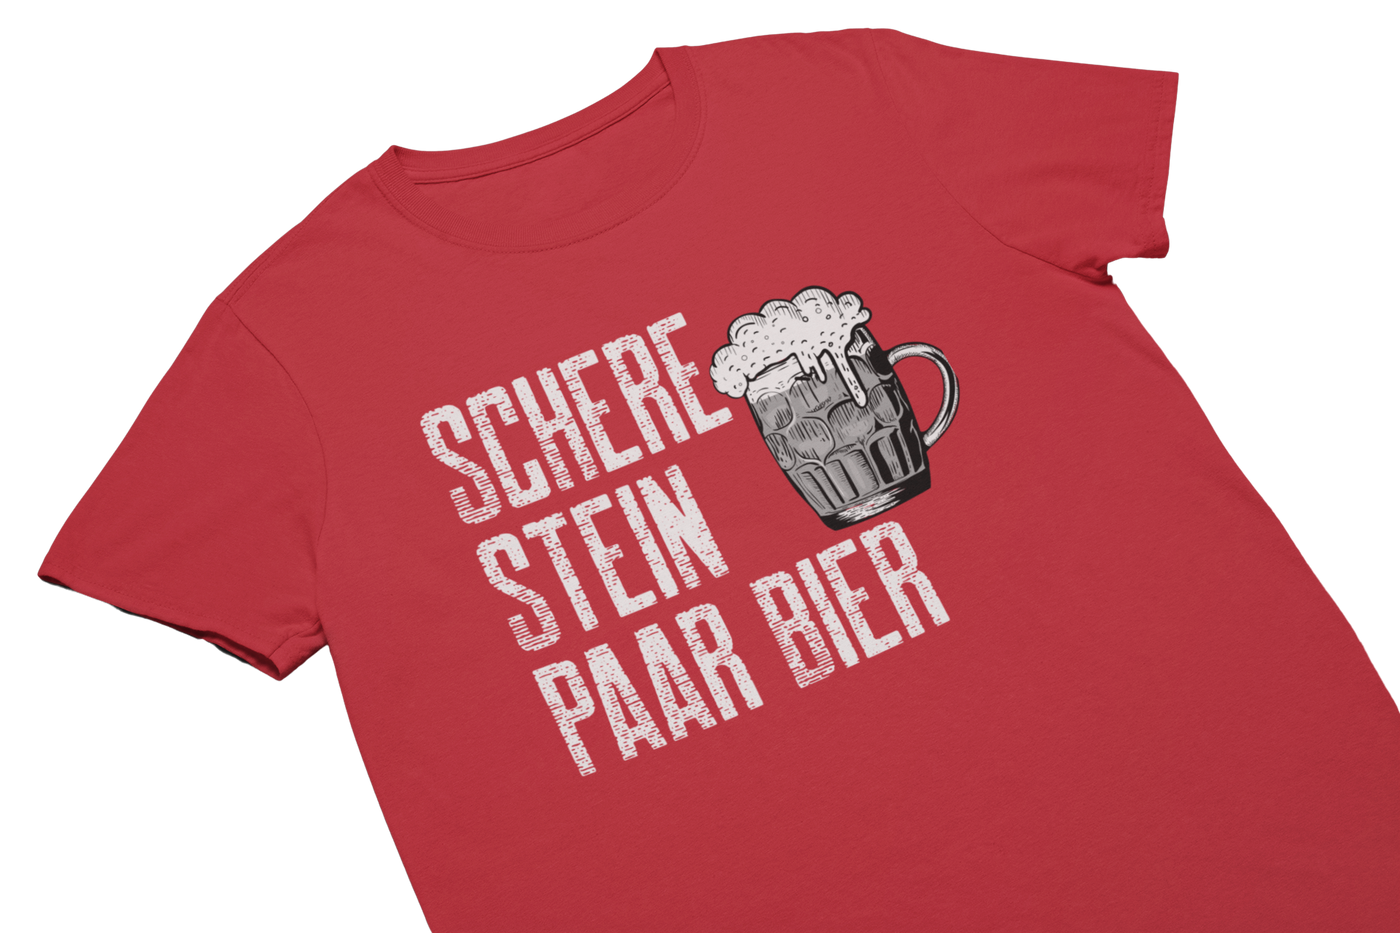 SCHERE STEIN PAAR BIER - T-Shirt Rot